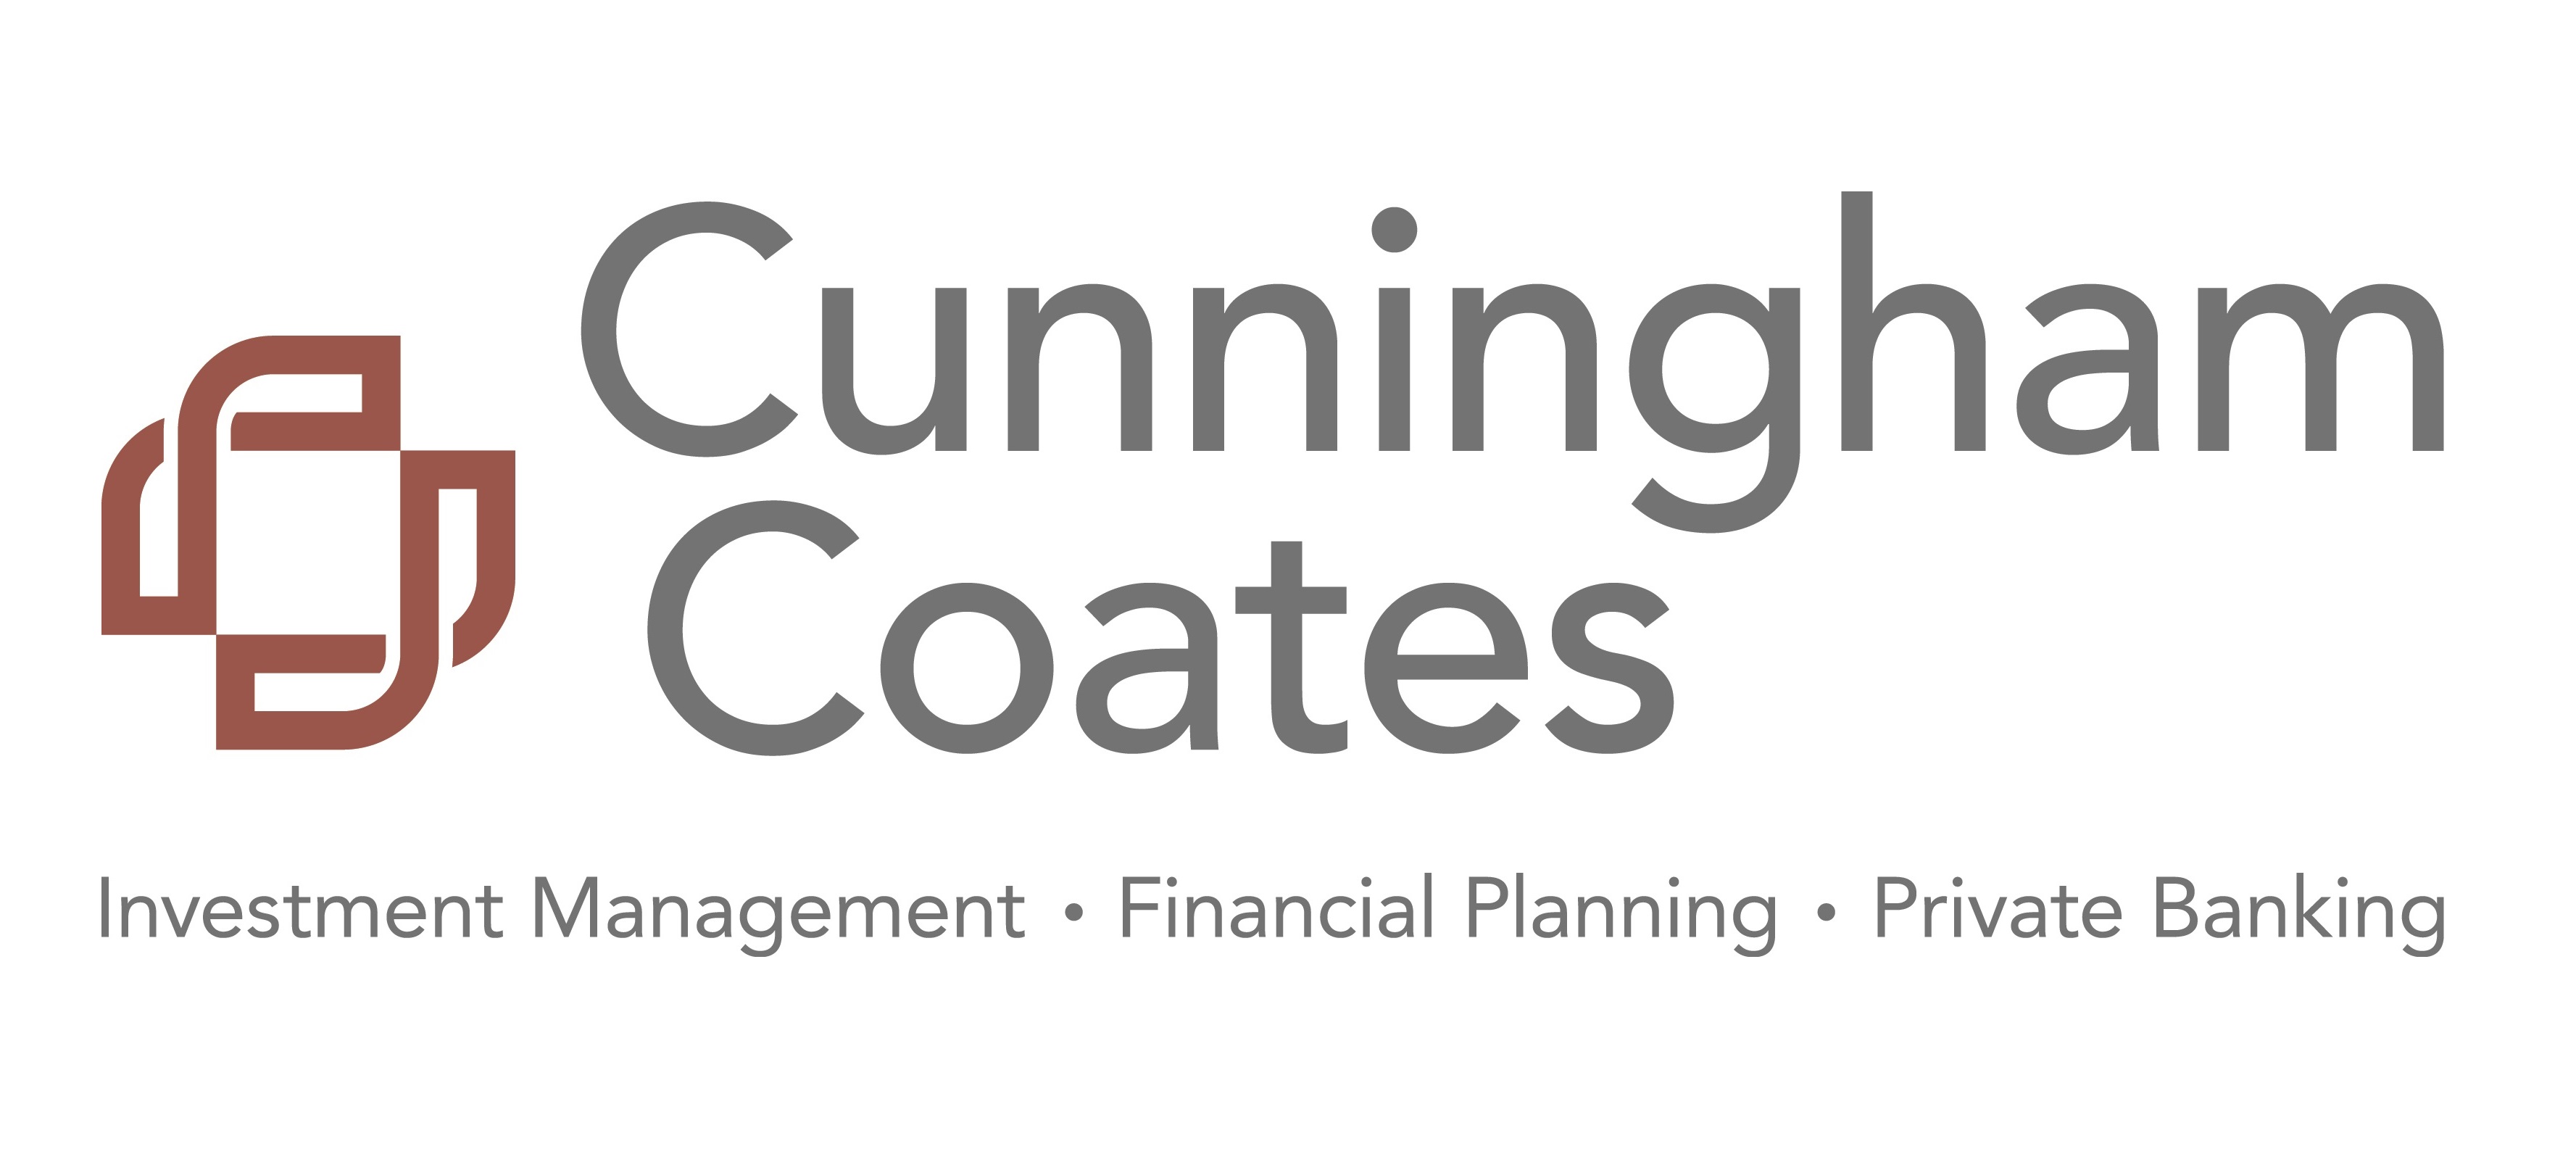 Cunningham Coates logo